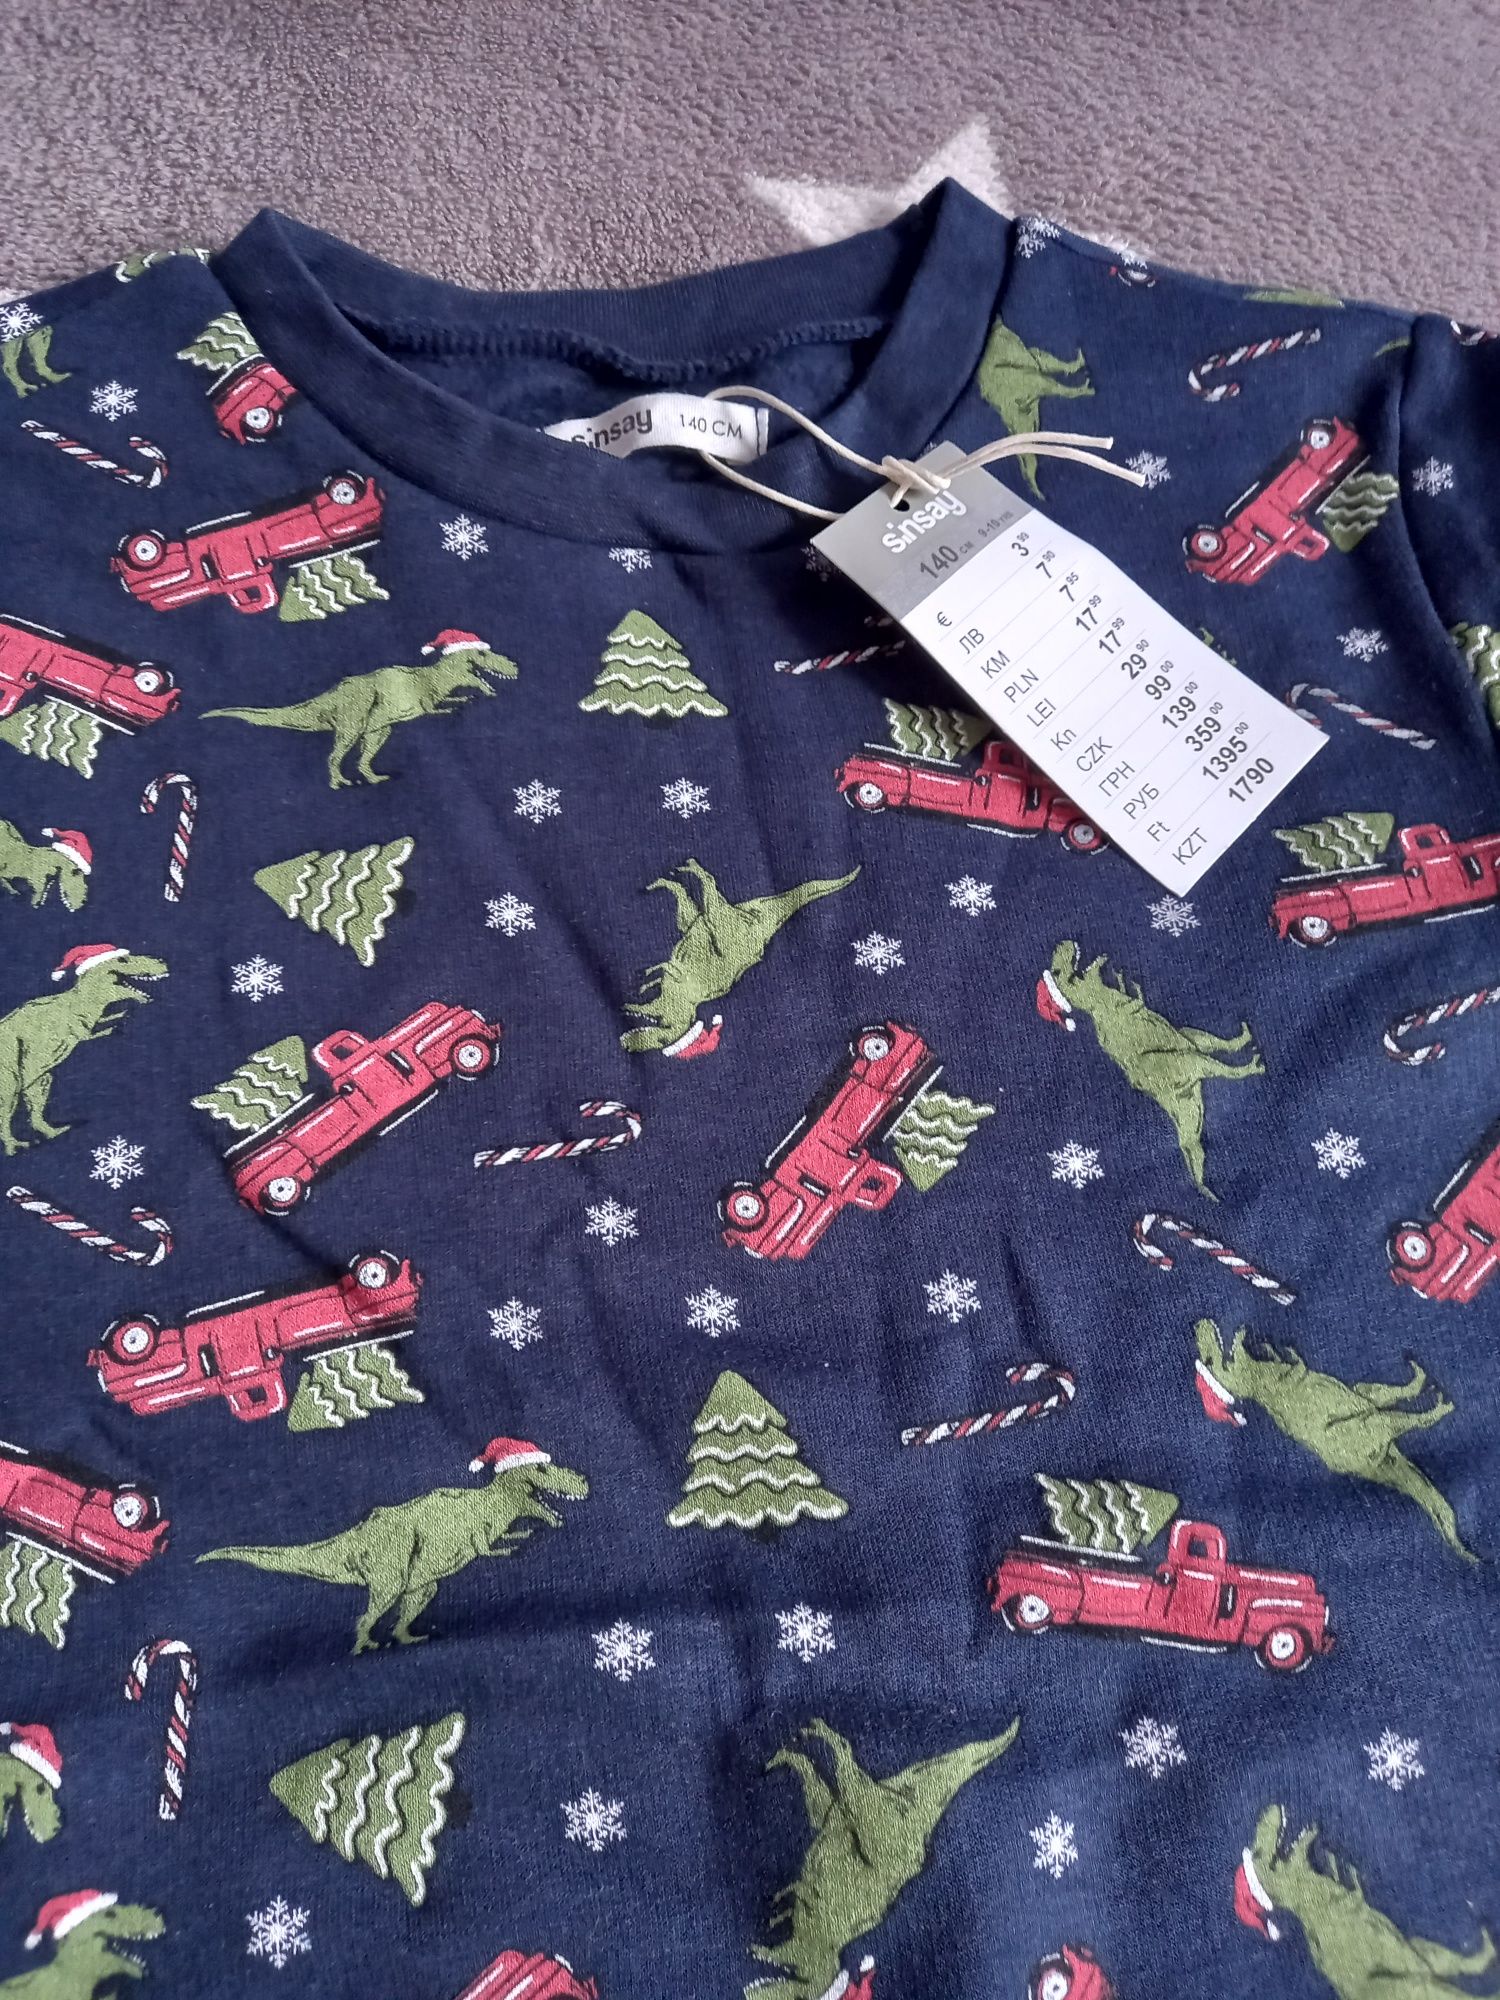 NOWA bluza sweter sweterek sinsay 140 dinozaur dinozaury święta metka